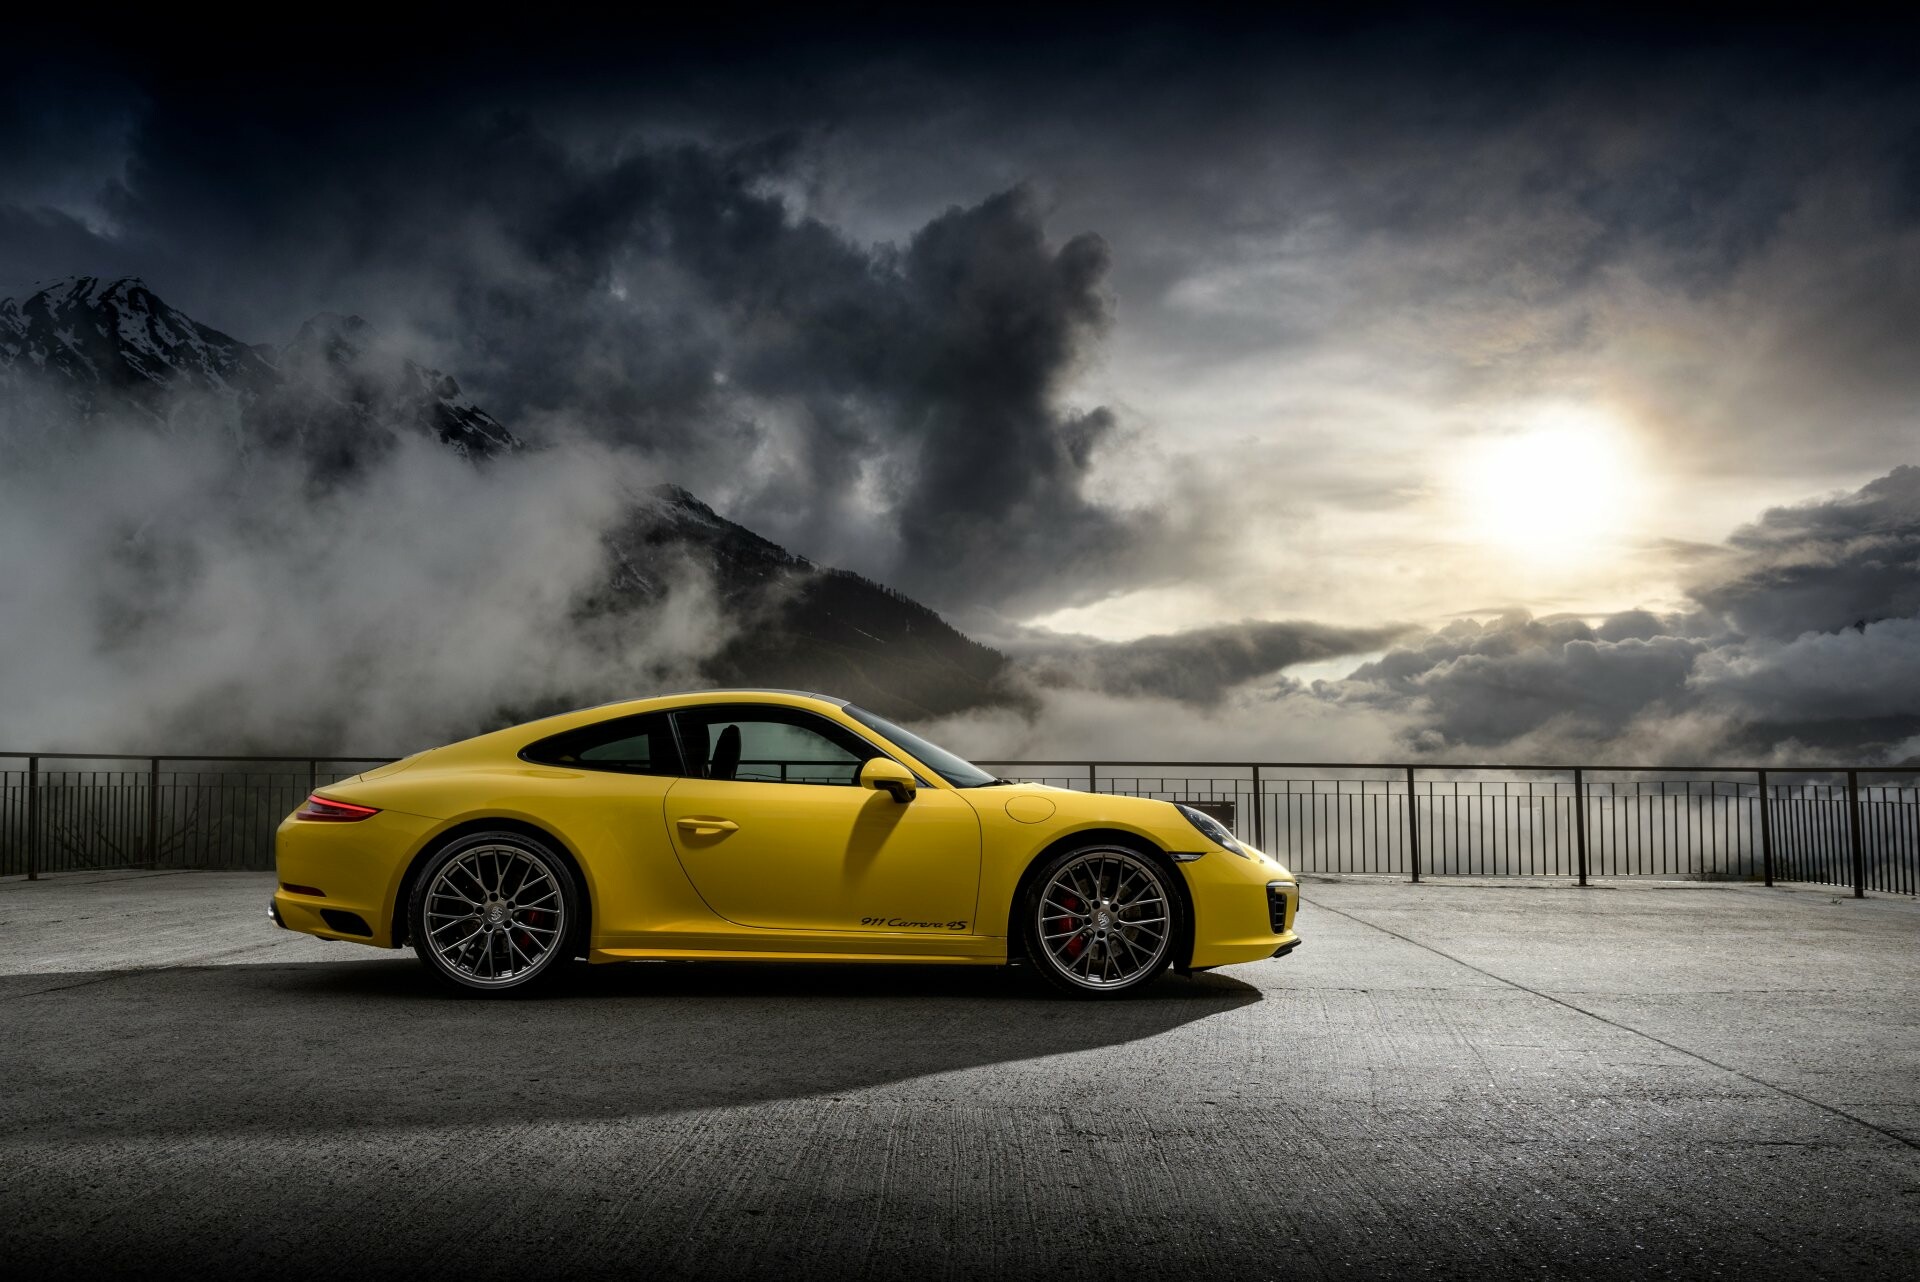 Porsche: Carrera, Sports cars with astonishing performance. 1920x1290 HD Wallpaper.